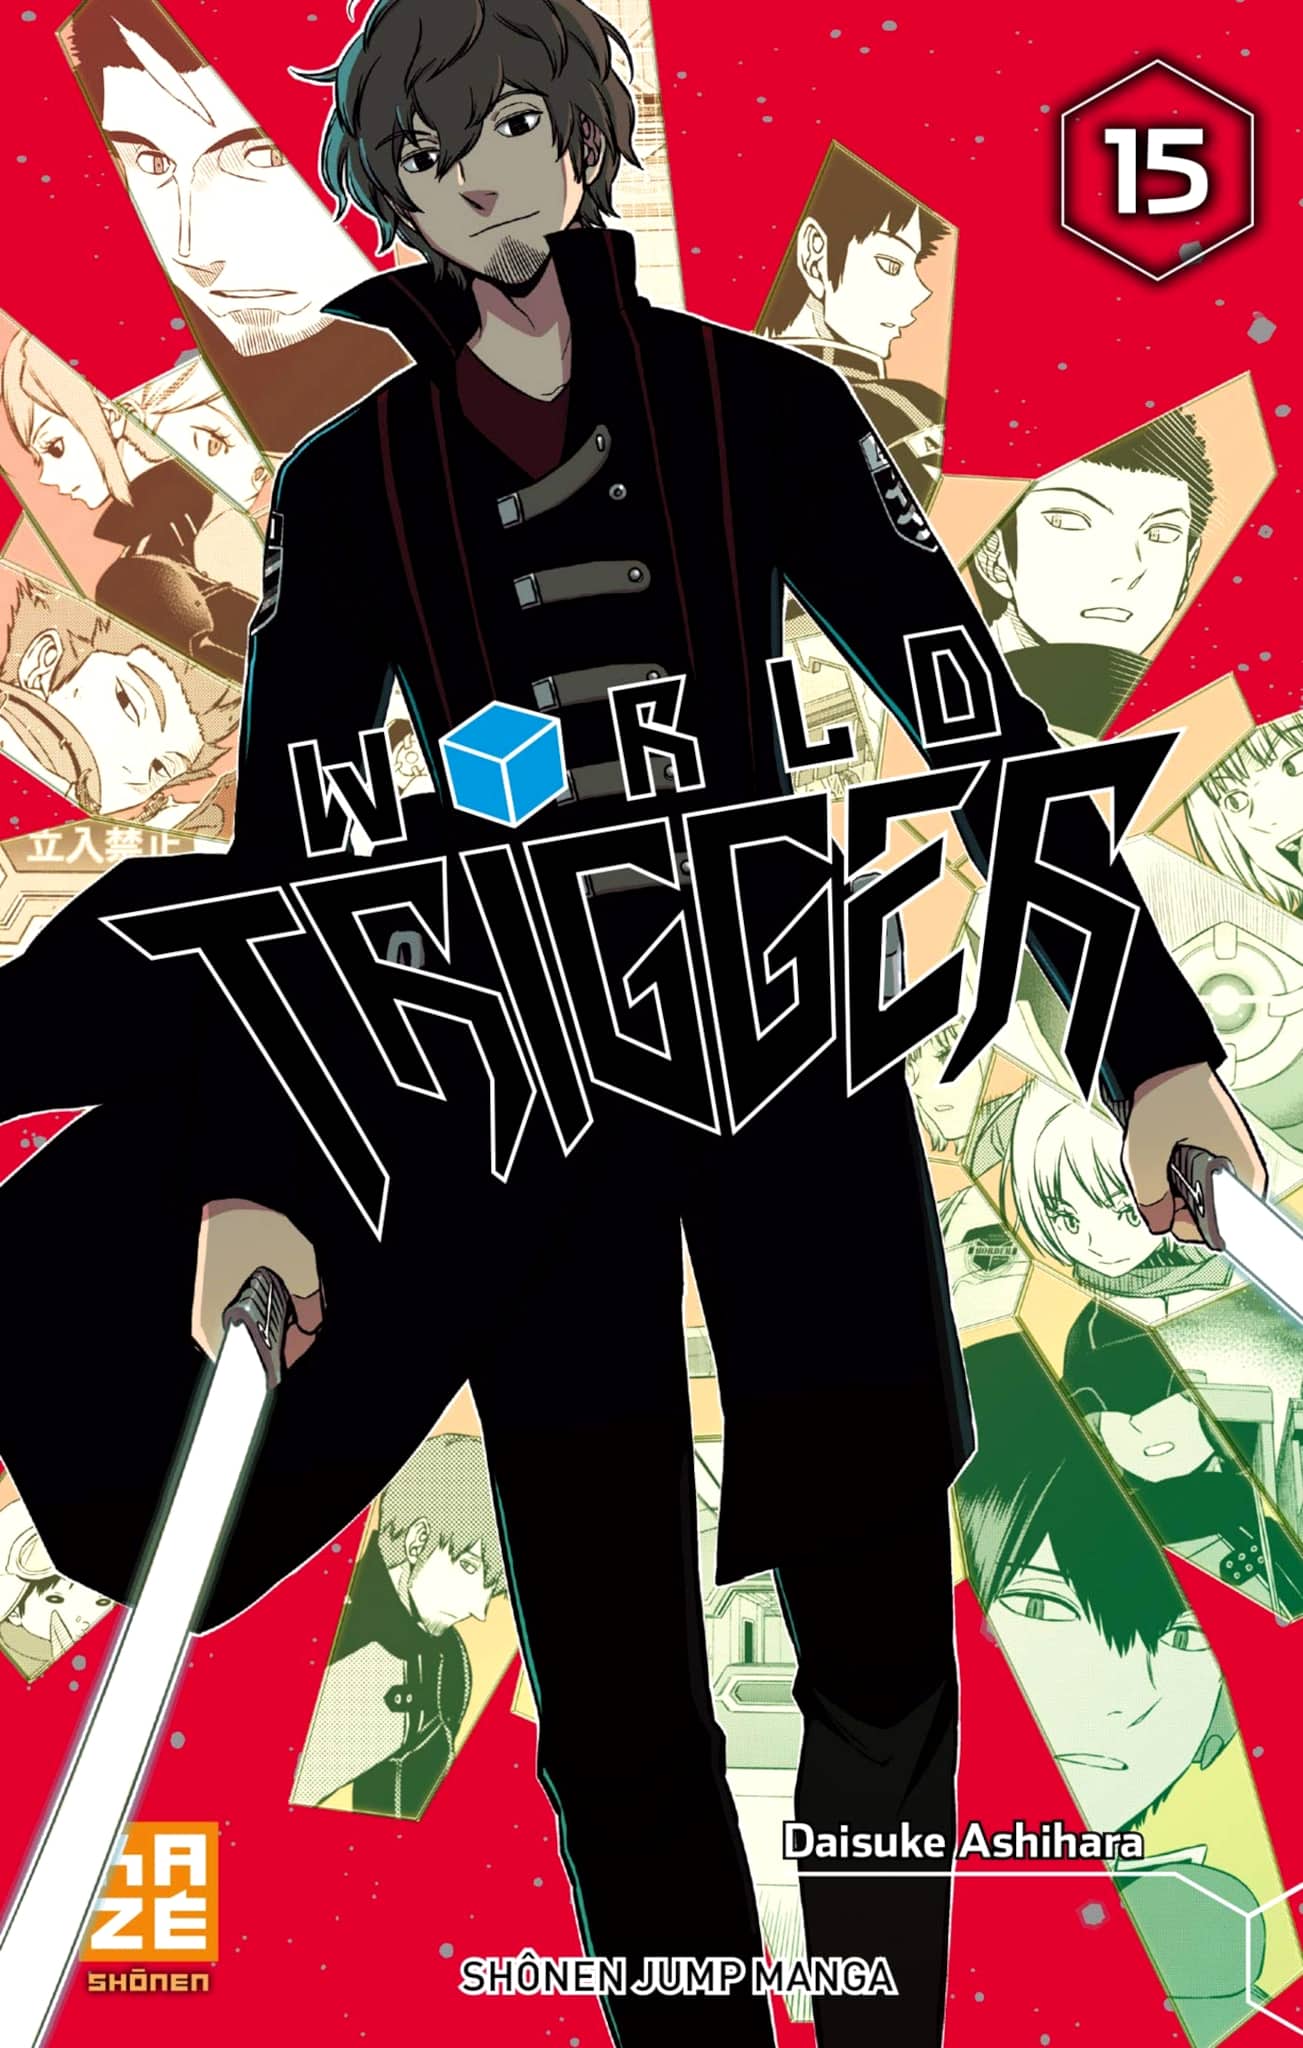 Tome 15 du manga World Trigger